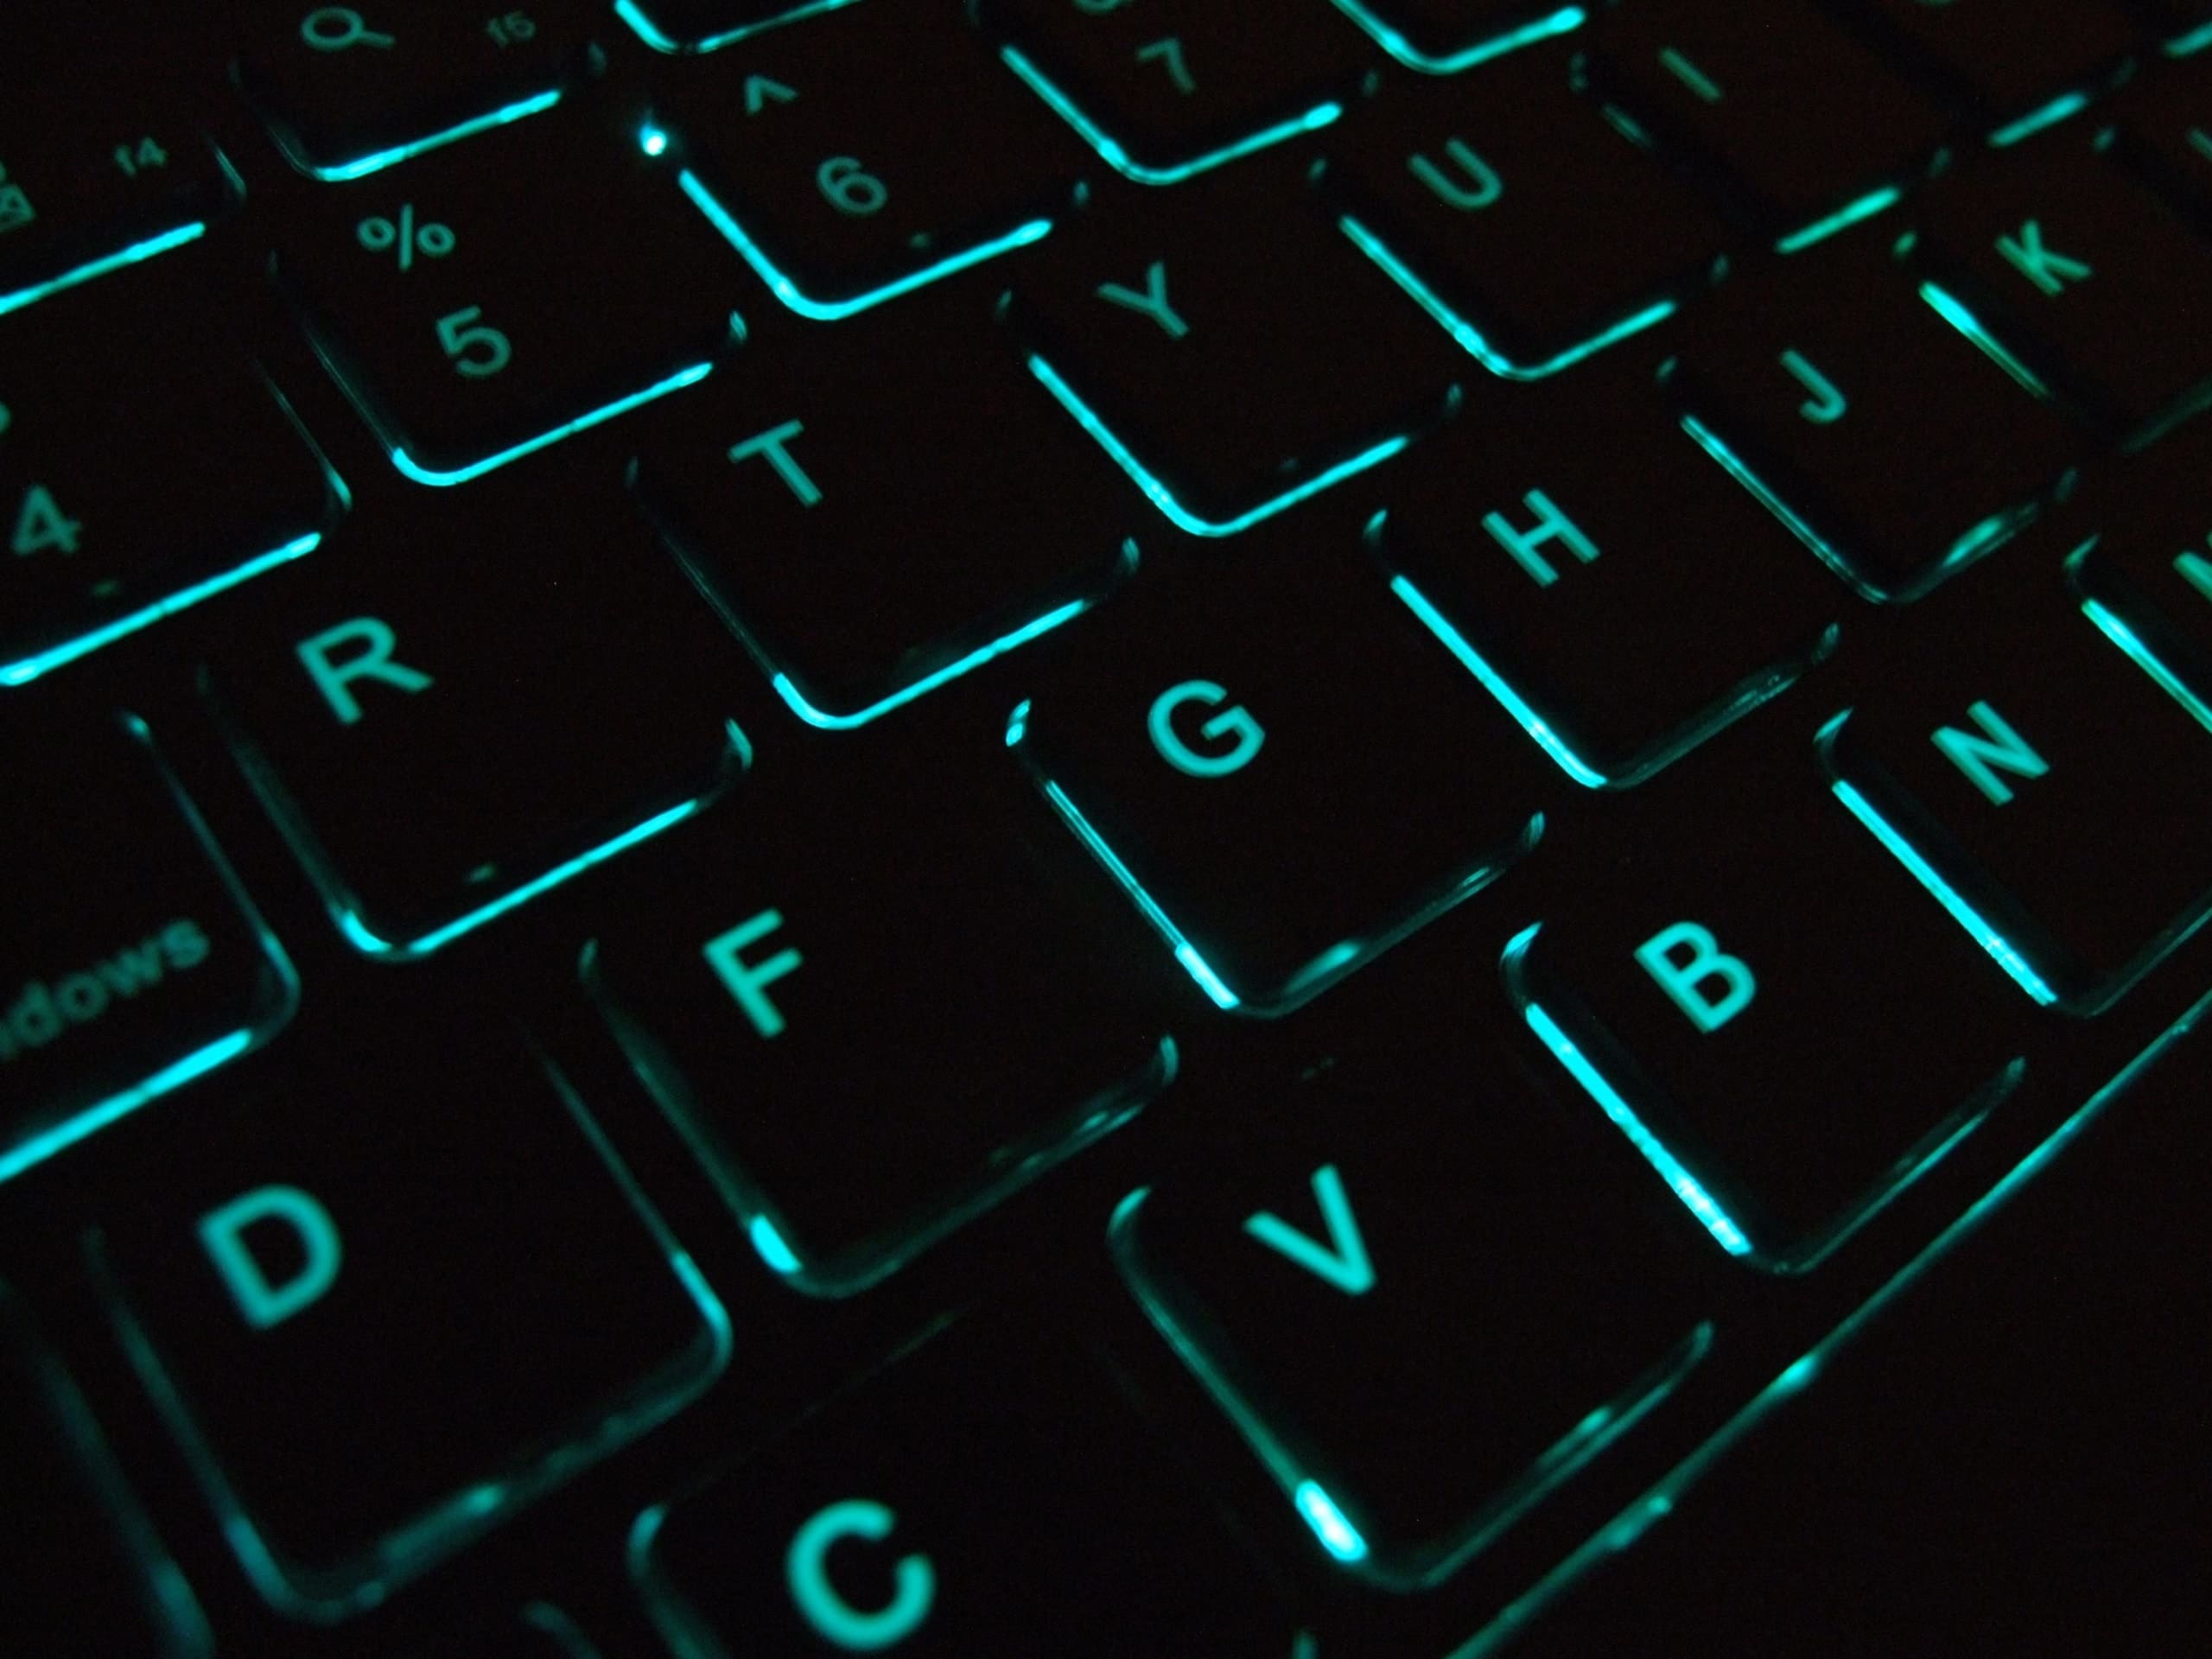 lit up keyboard